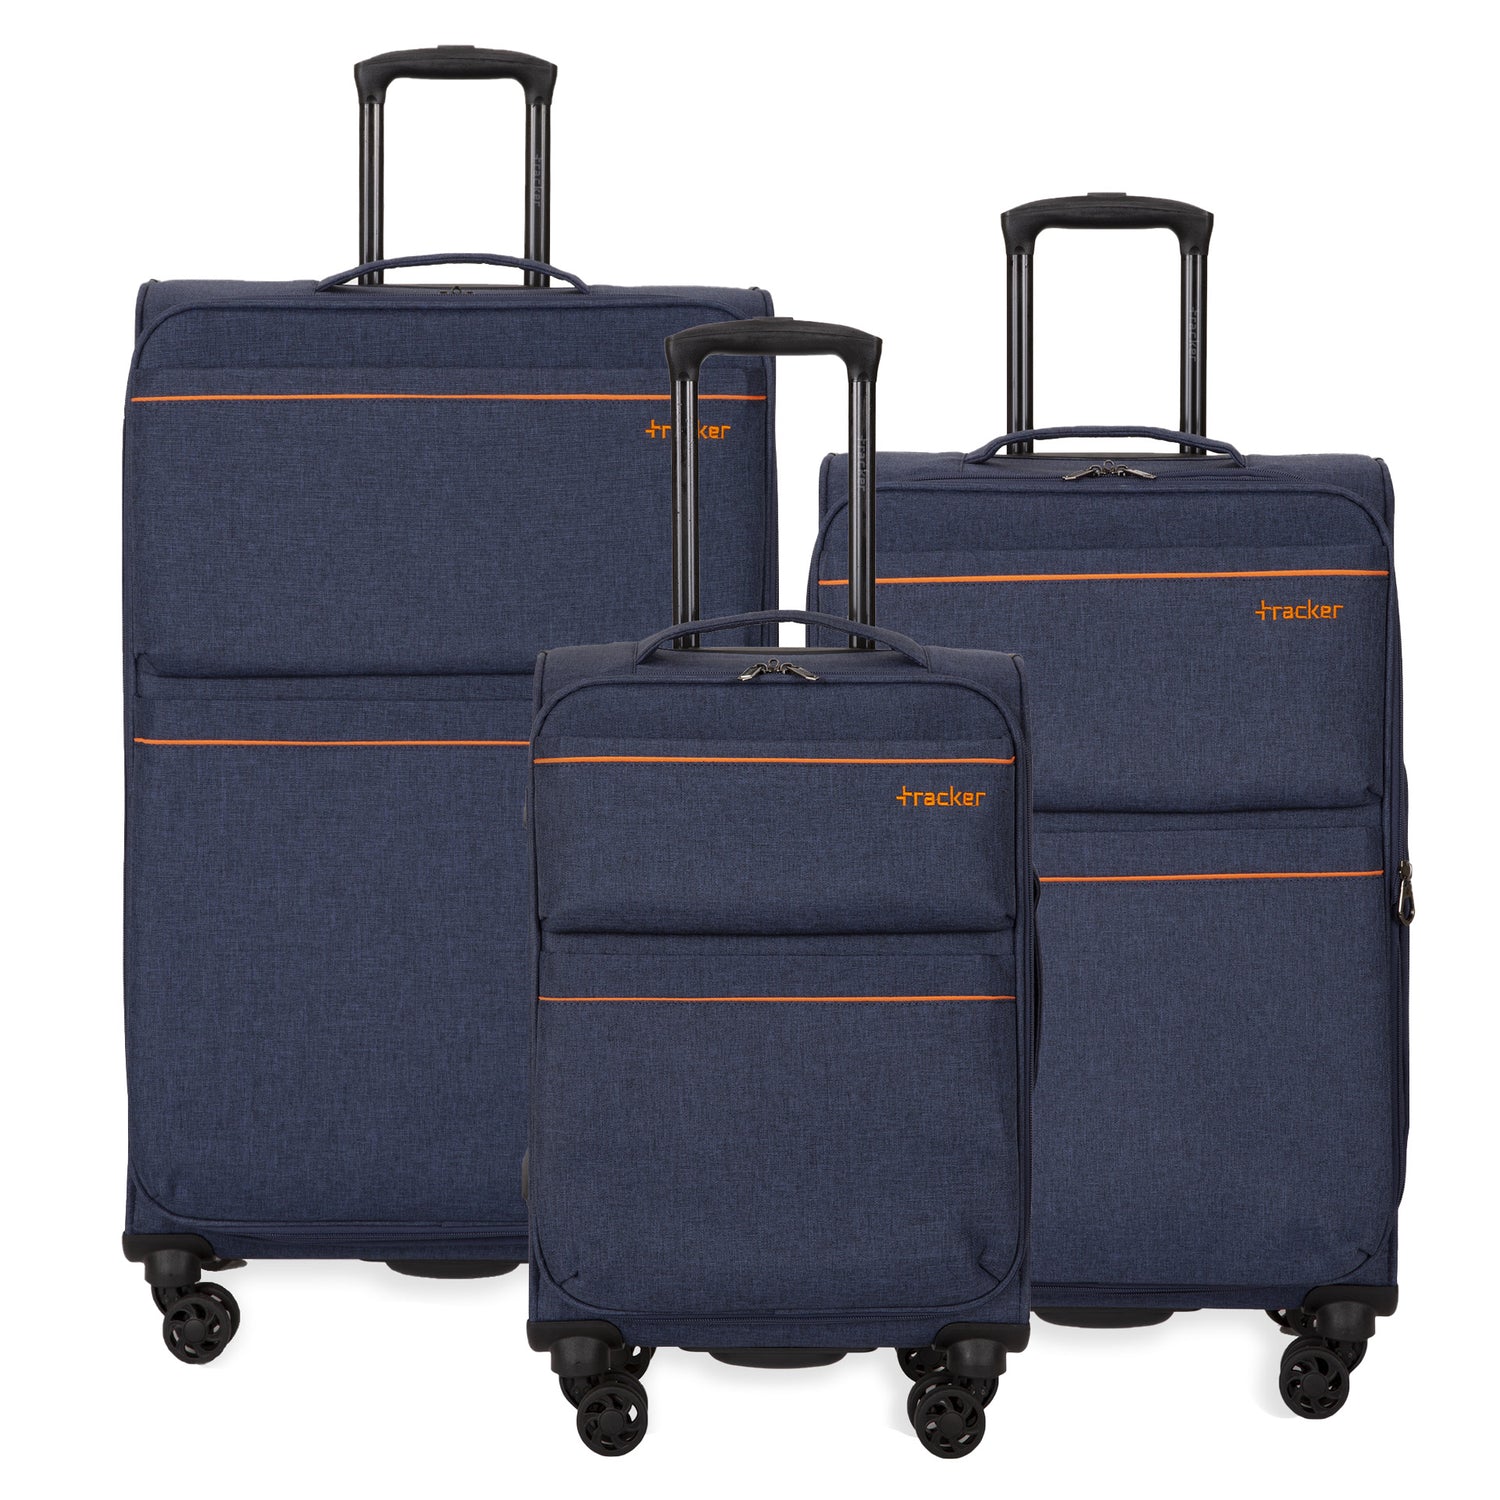 Expedition 4.0 Softside Luggage Set - Bentley